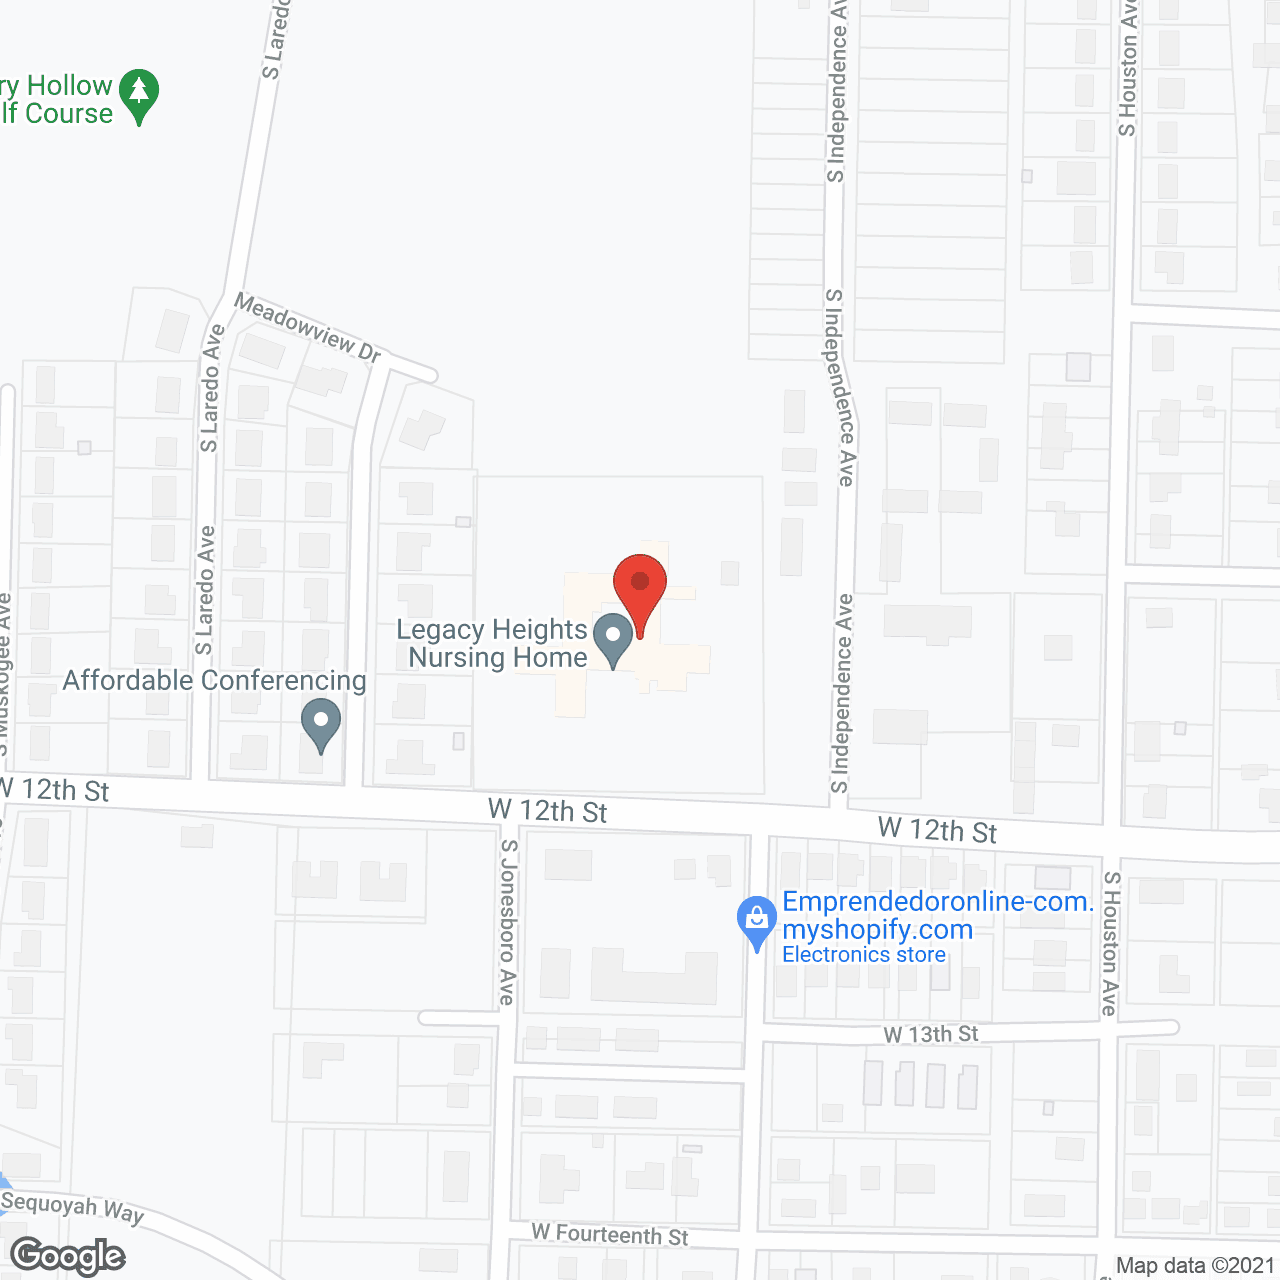 Legacy Lodge Nursing Home in google map